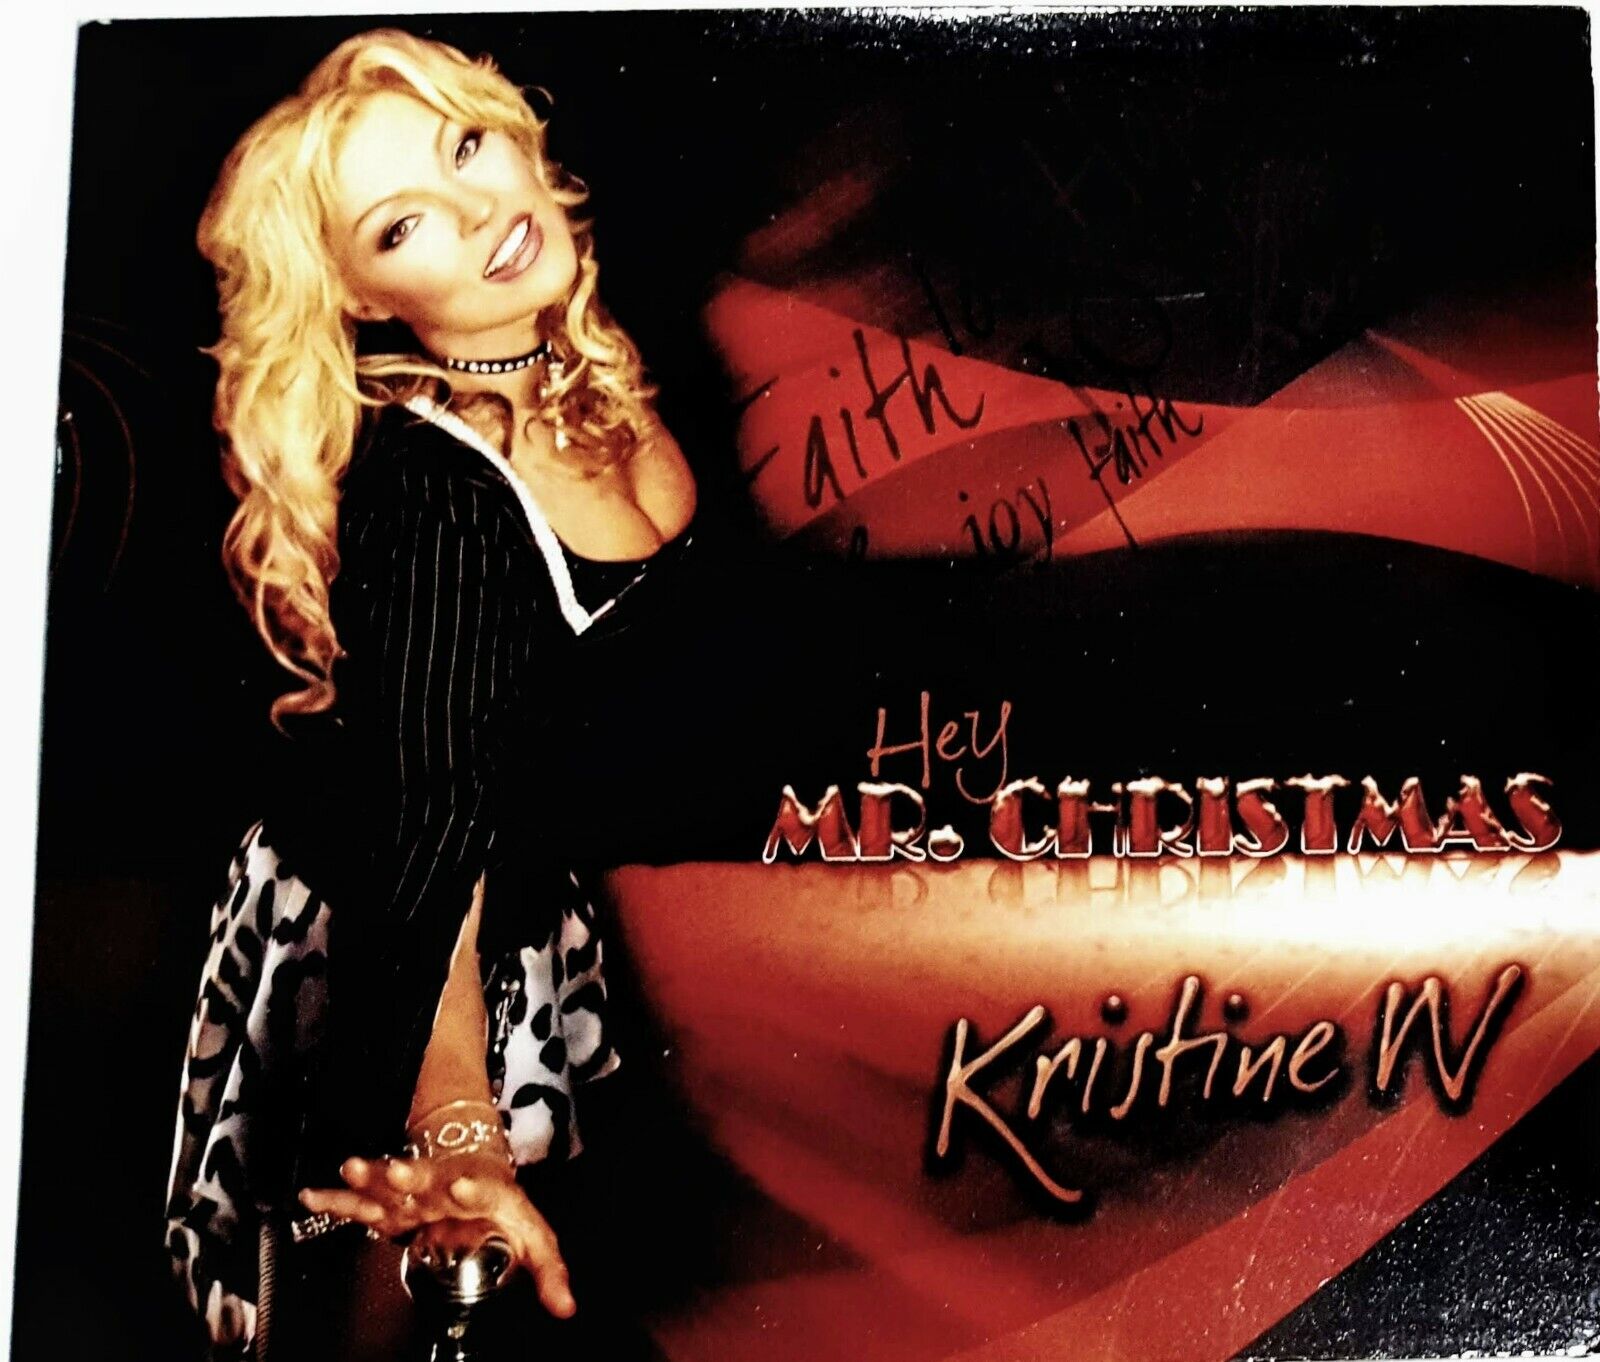 CHRISTMAS CD Hey, Mr. Christmas by Kristine W. (CD 2008 FAM Rec.) READ TRACKLIST